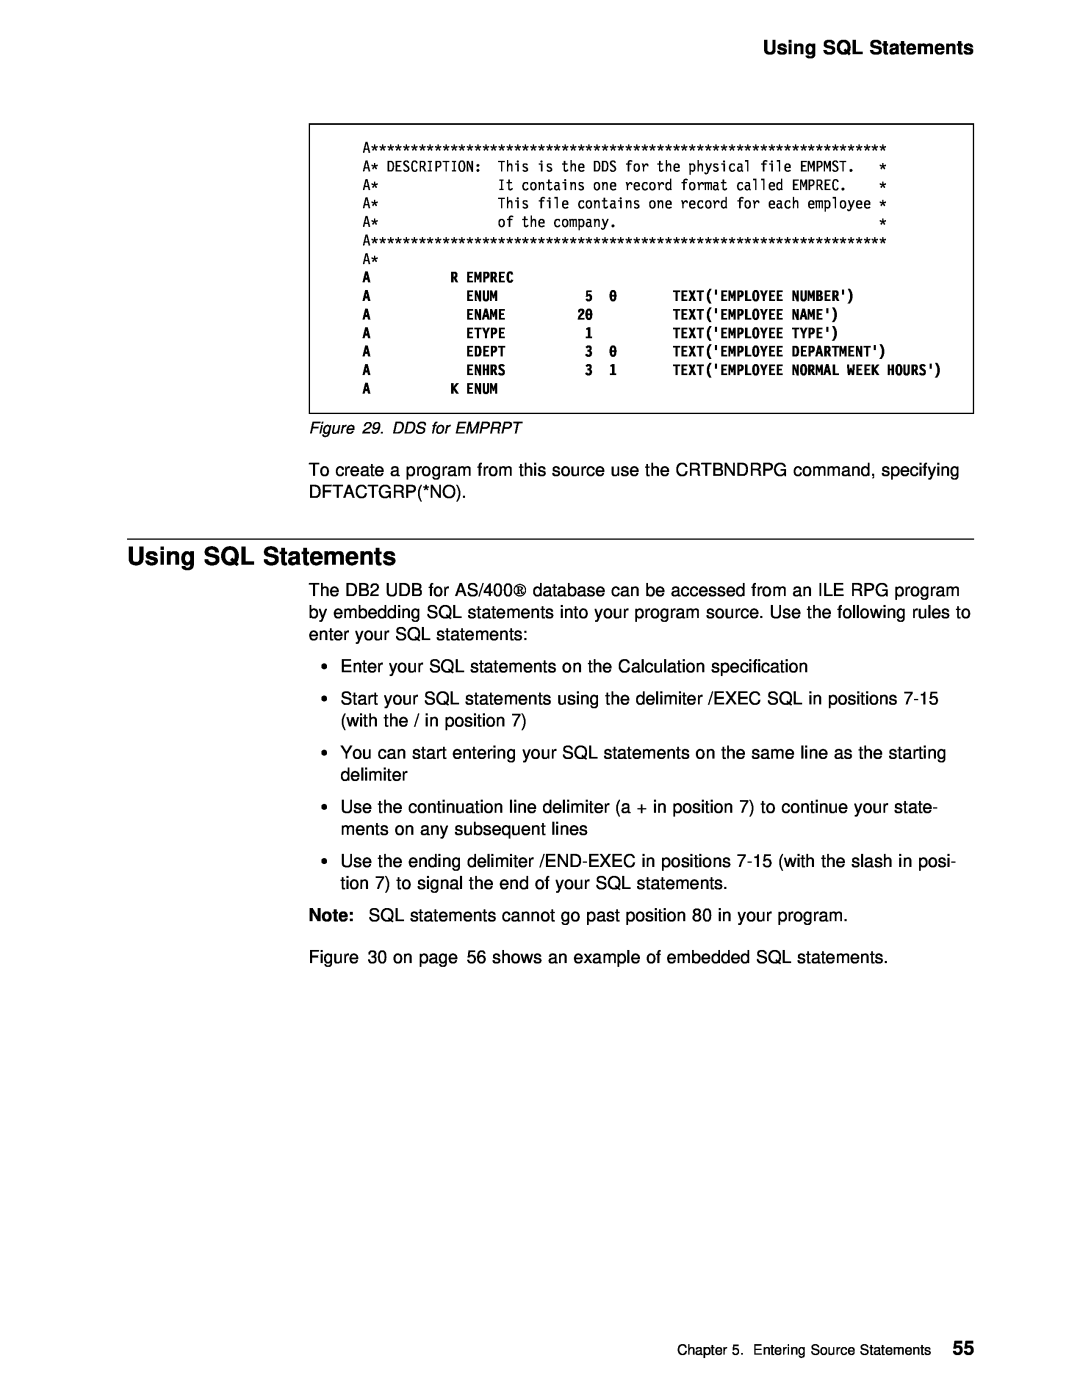 IBM AS/400 manual Using SQL Statements 